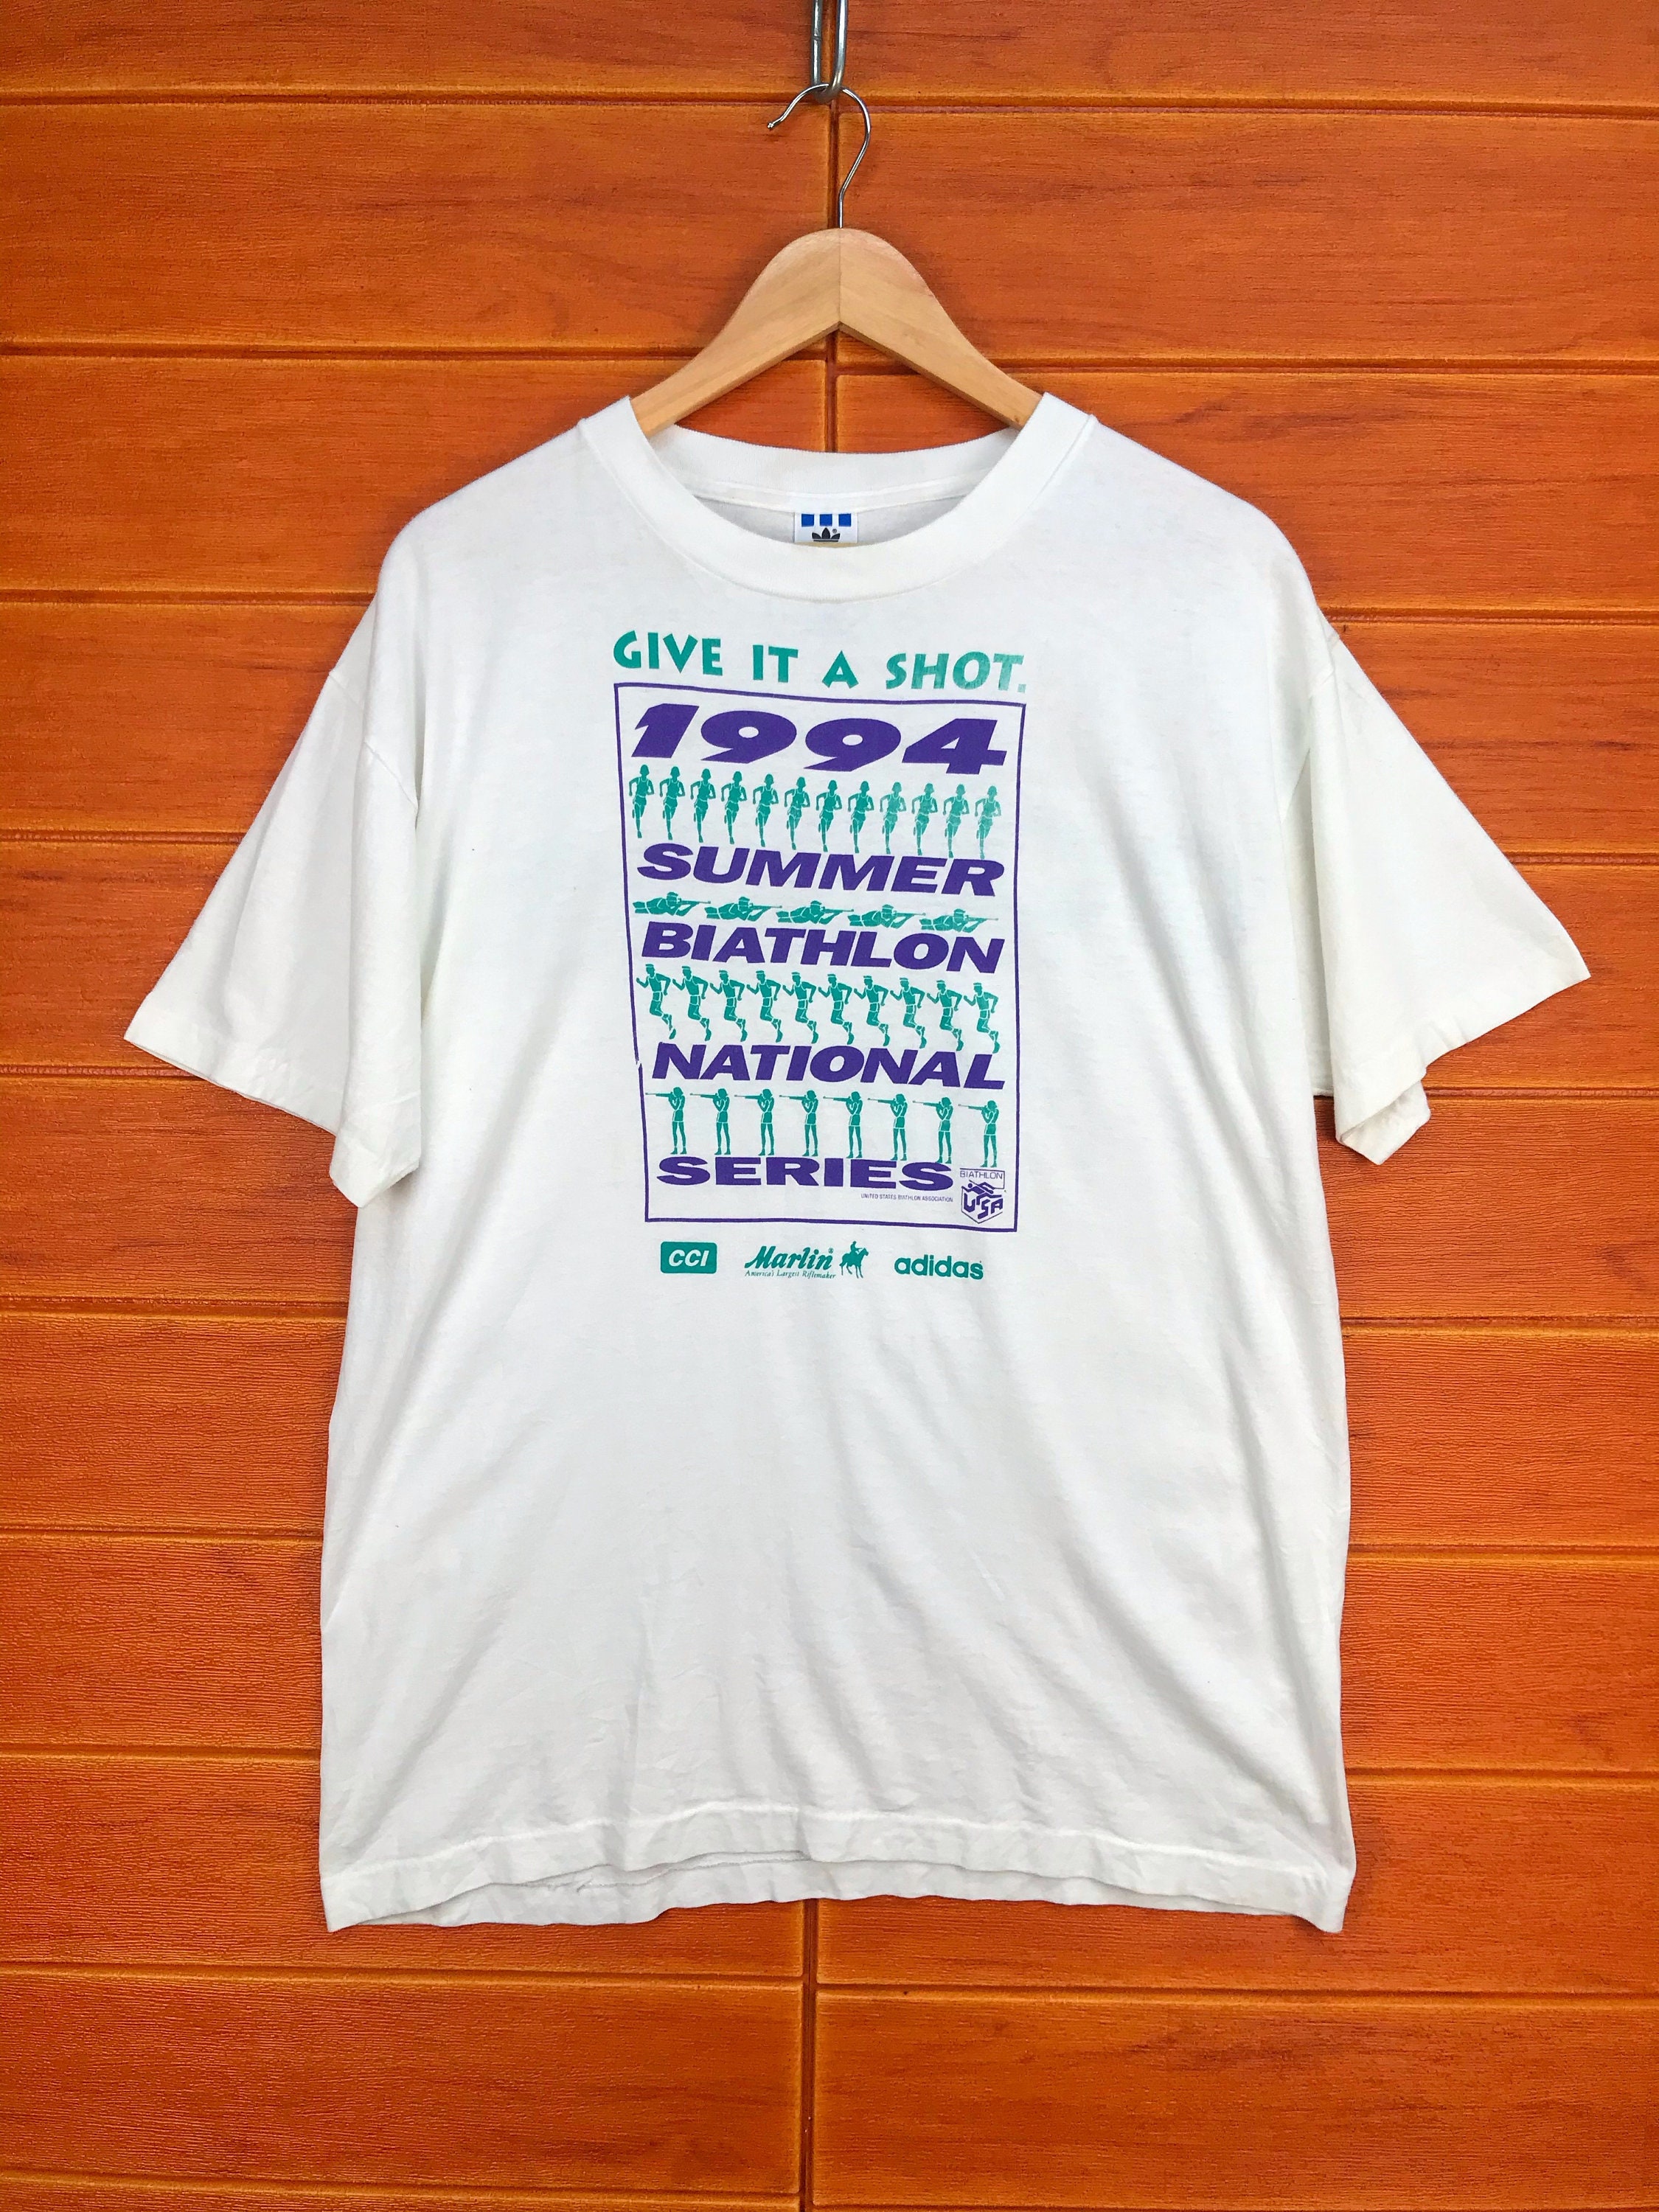 1994 Summer Biathlon National Series T-shirt / - Etsy